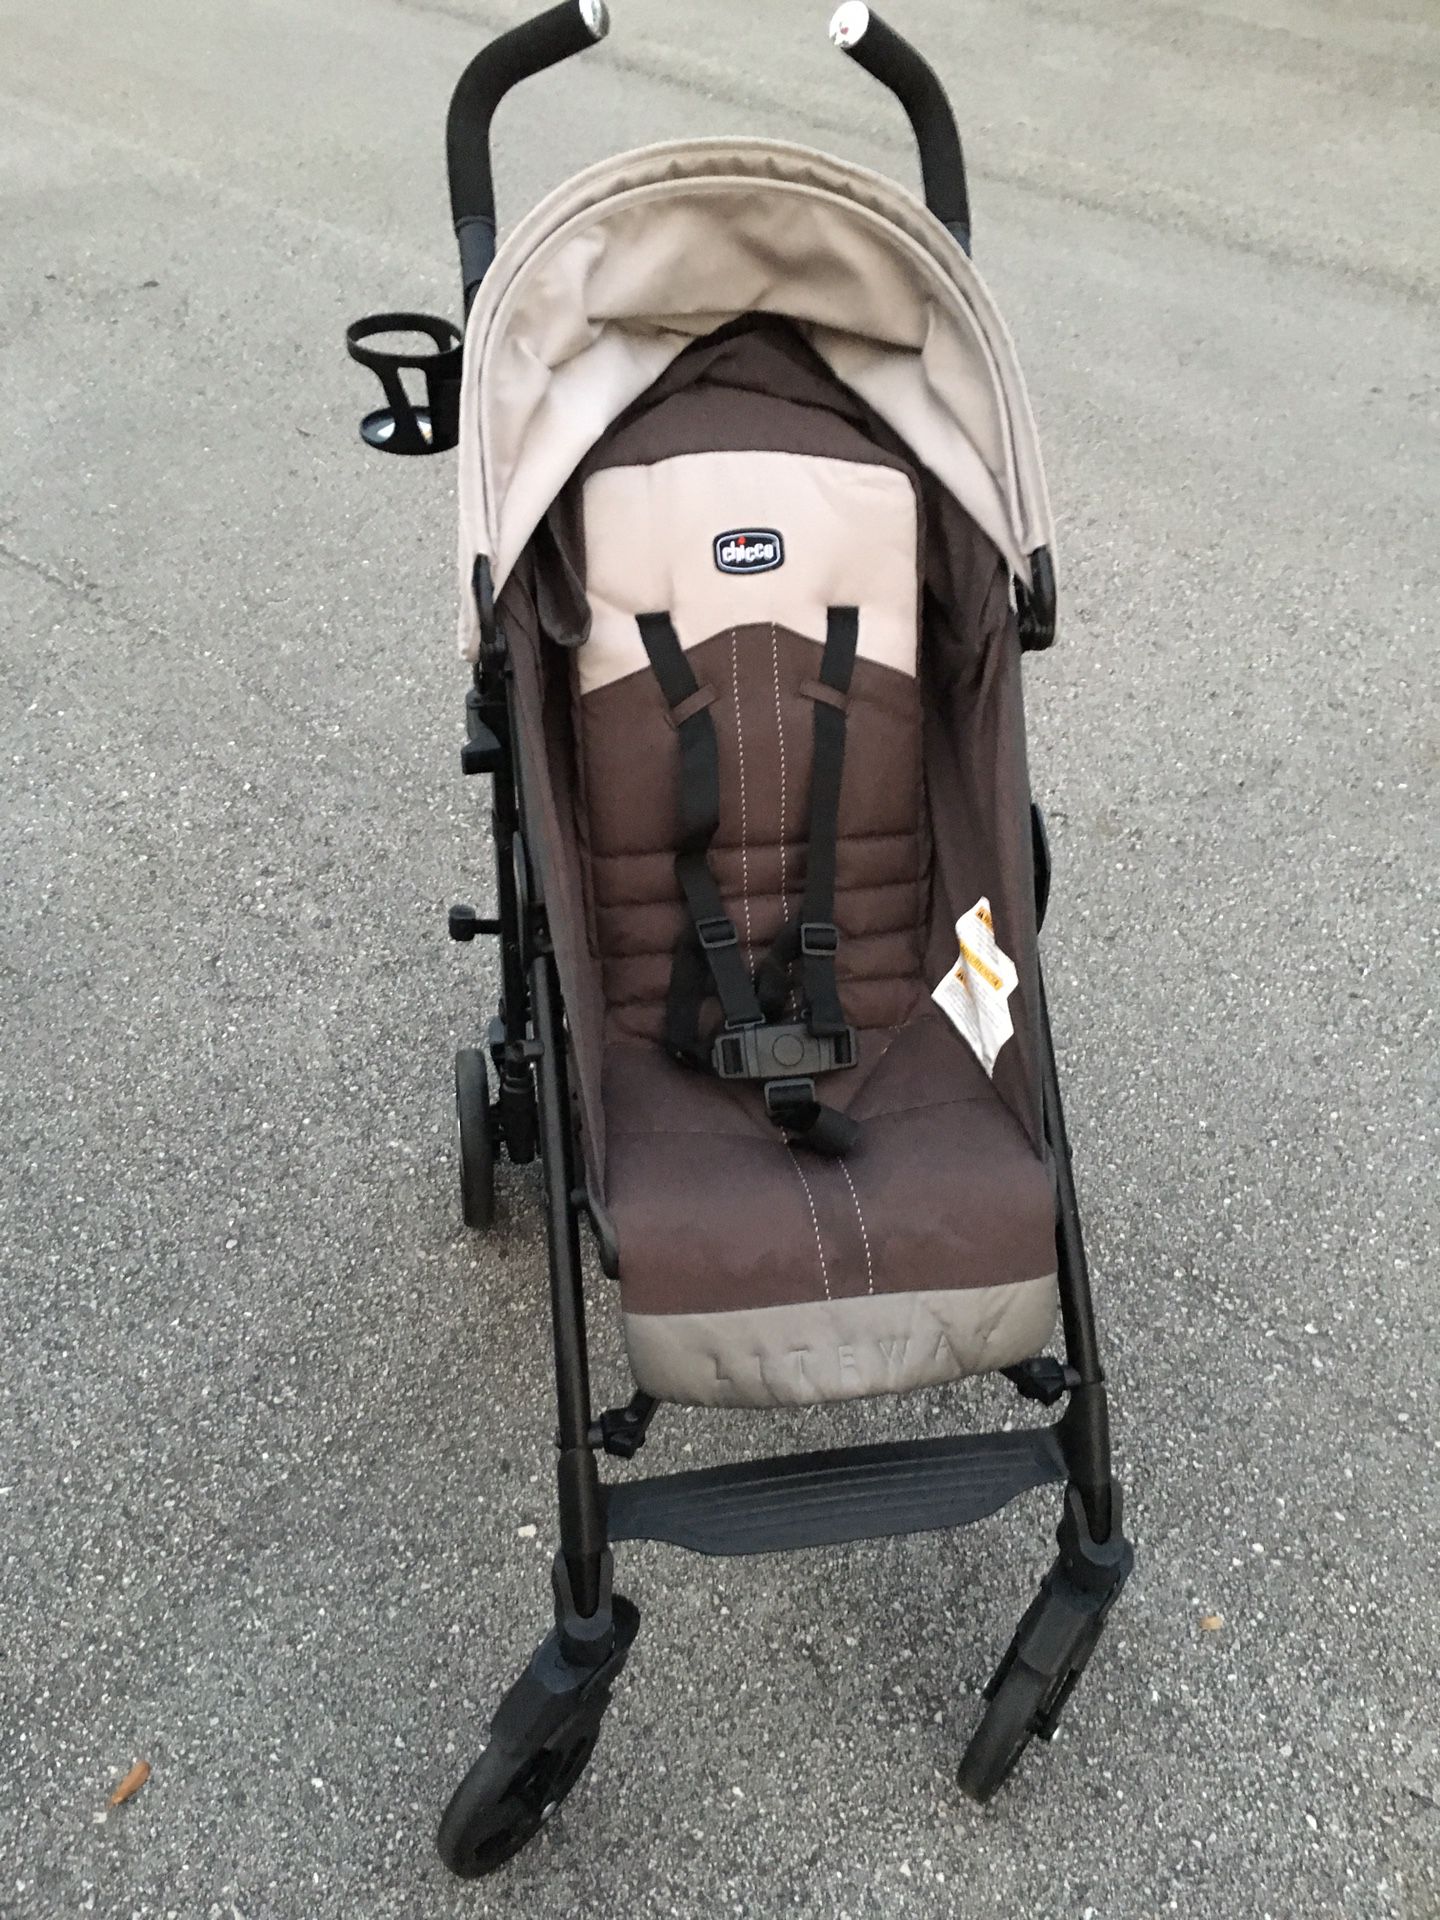 Chico lightweight baby stroller